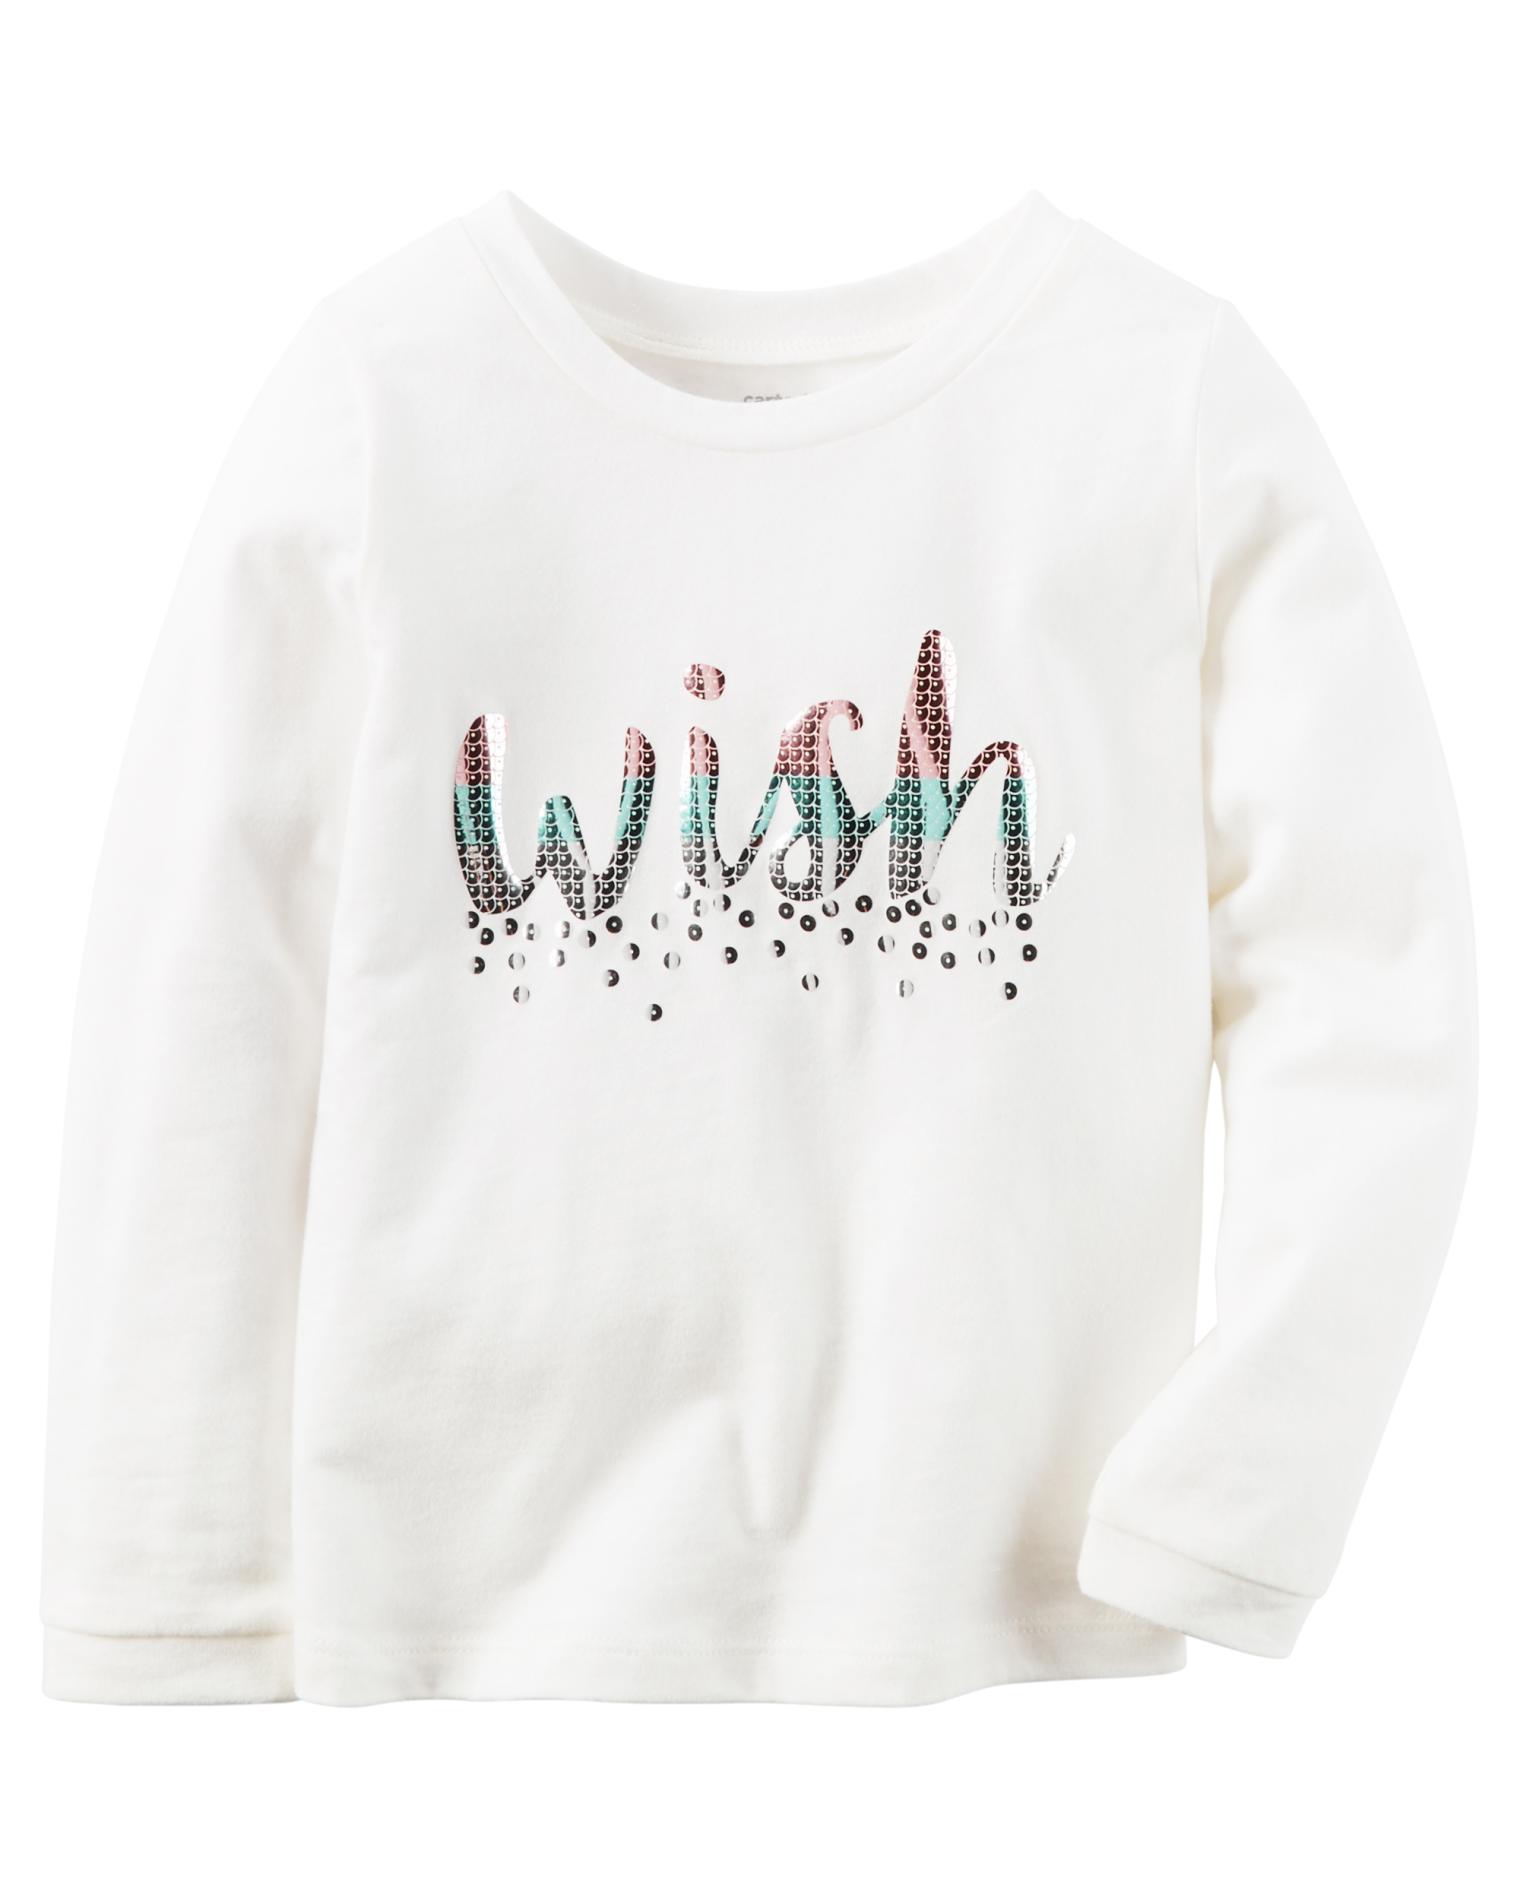 Carter's Toddler Girls' Graphic T-Shirt - Wish